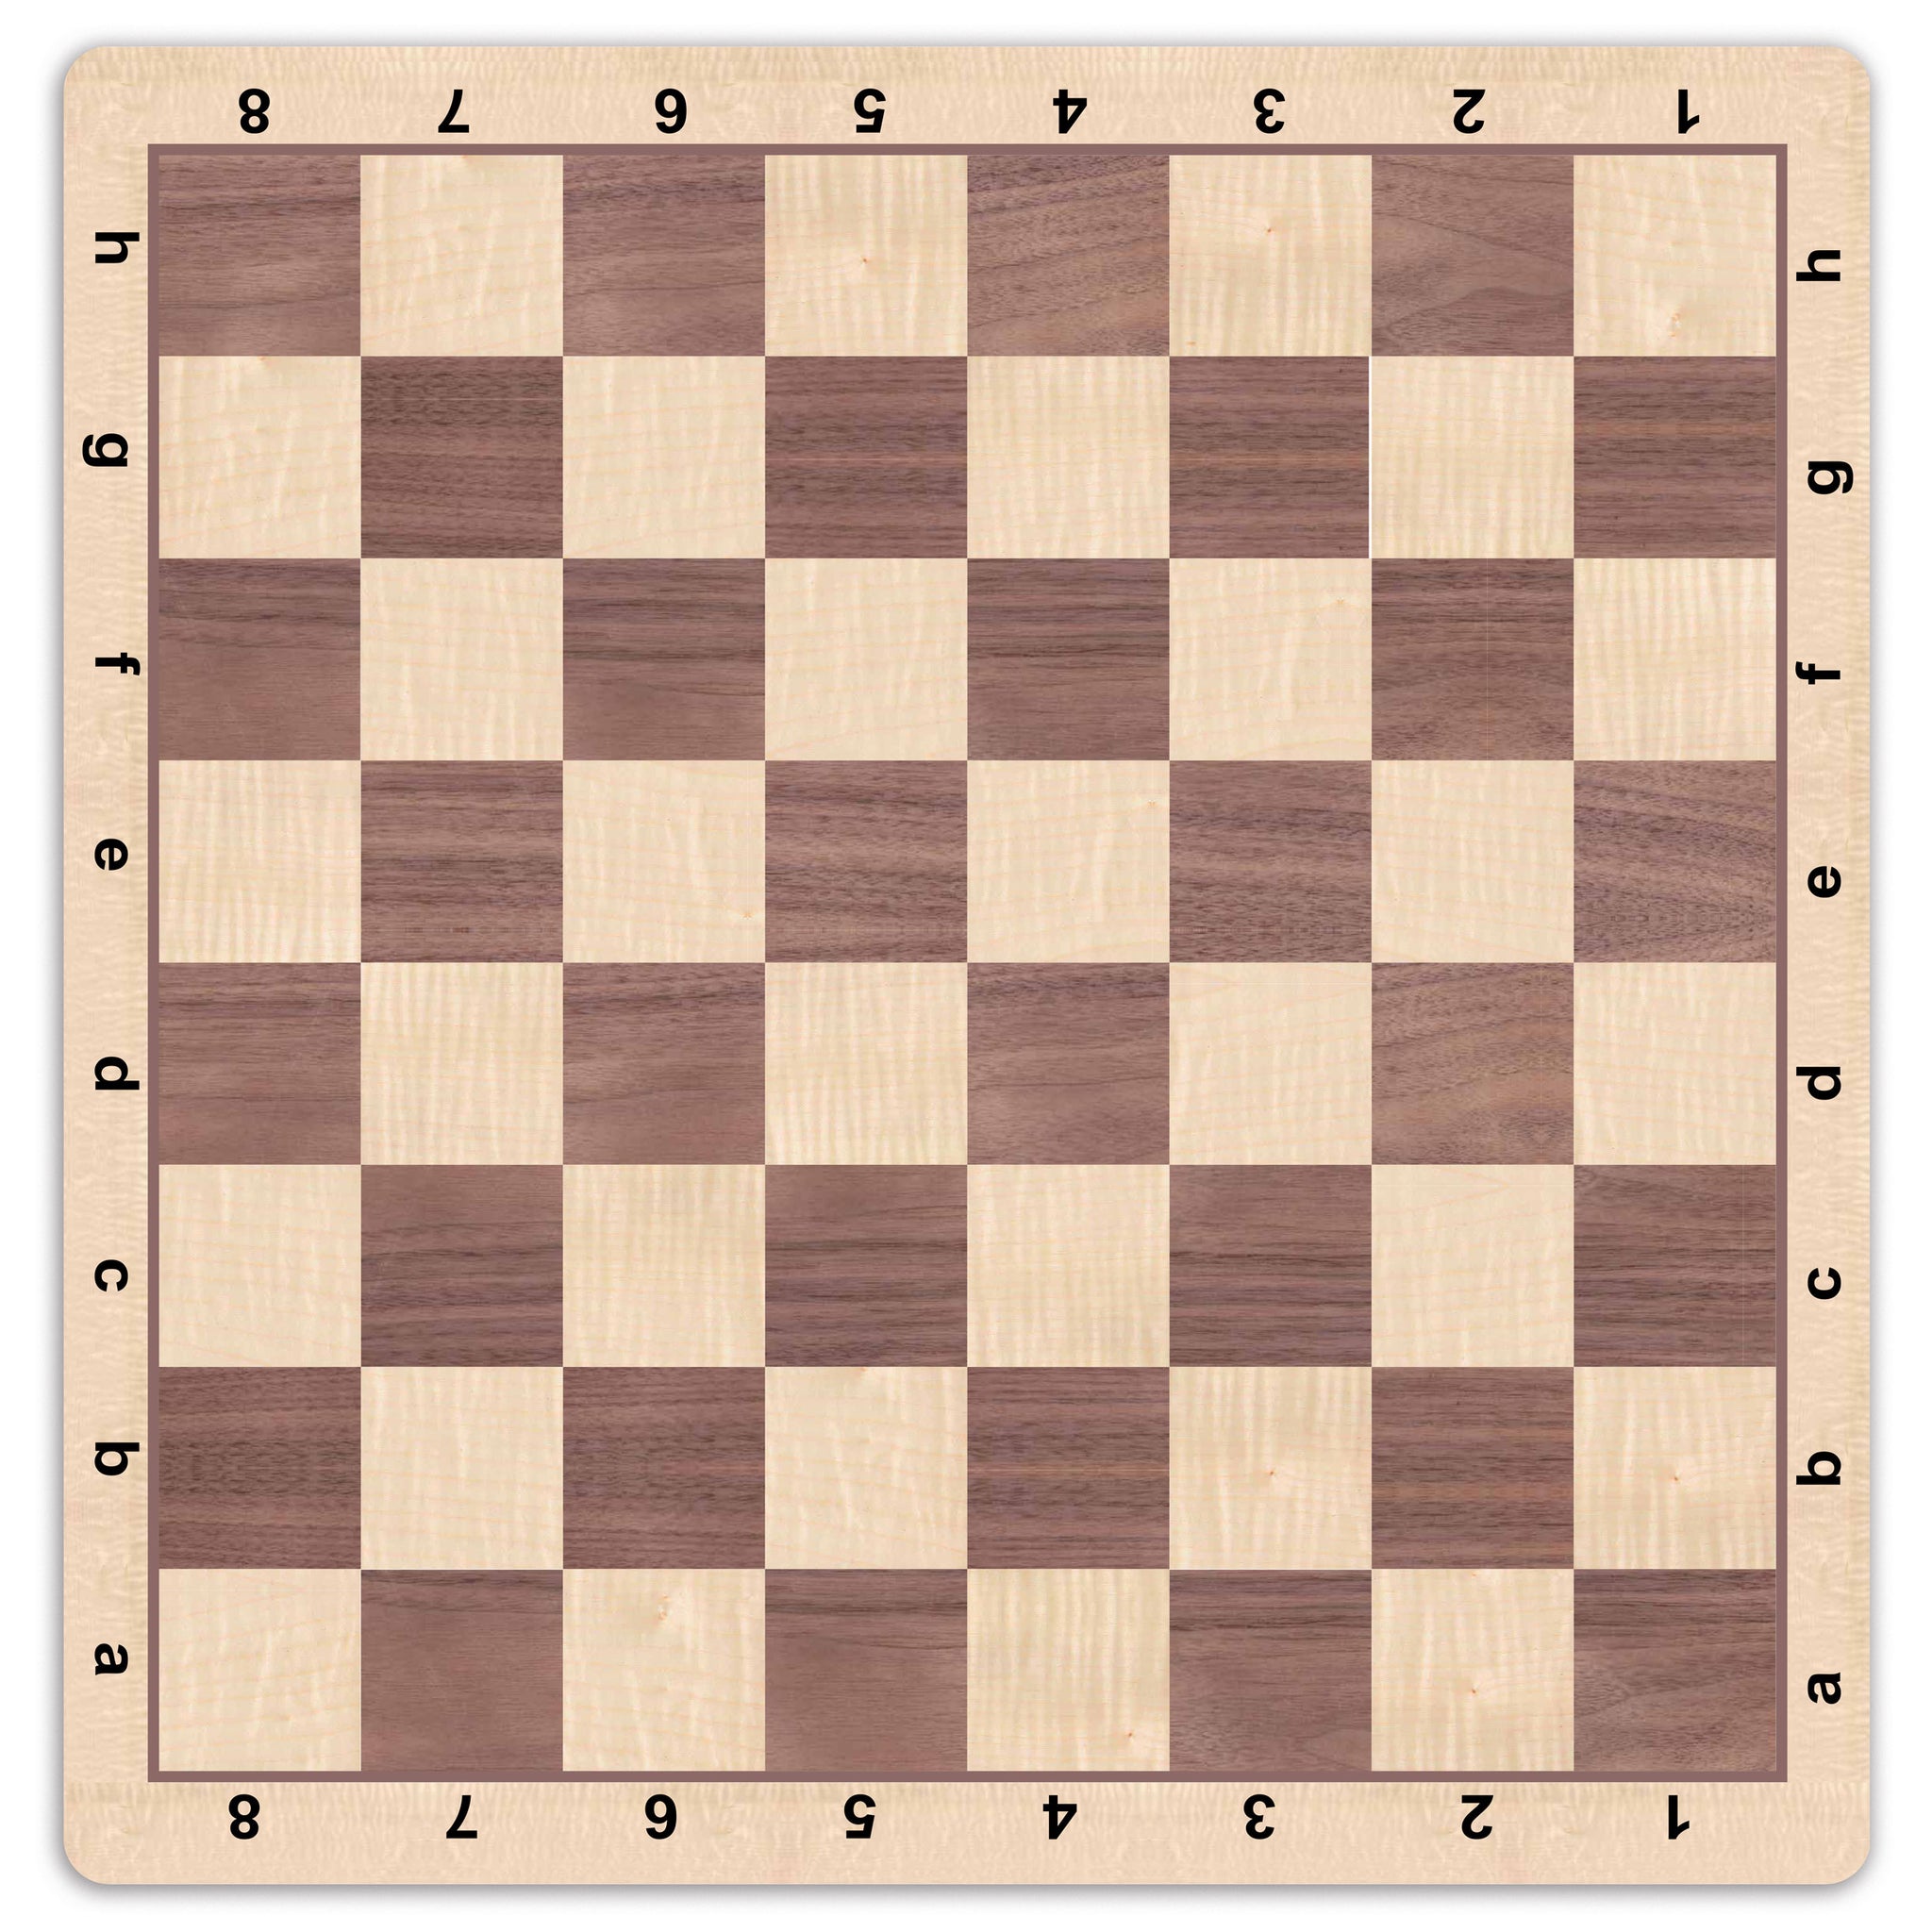 Mousepad Woodgrain Floppy Chess Board - Made in USA